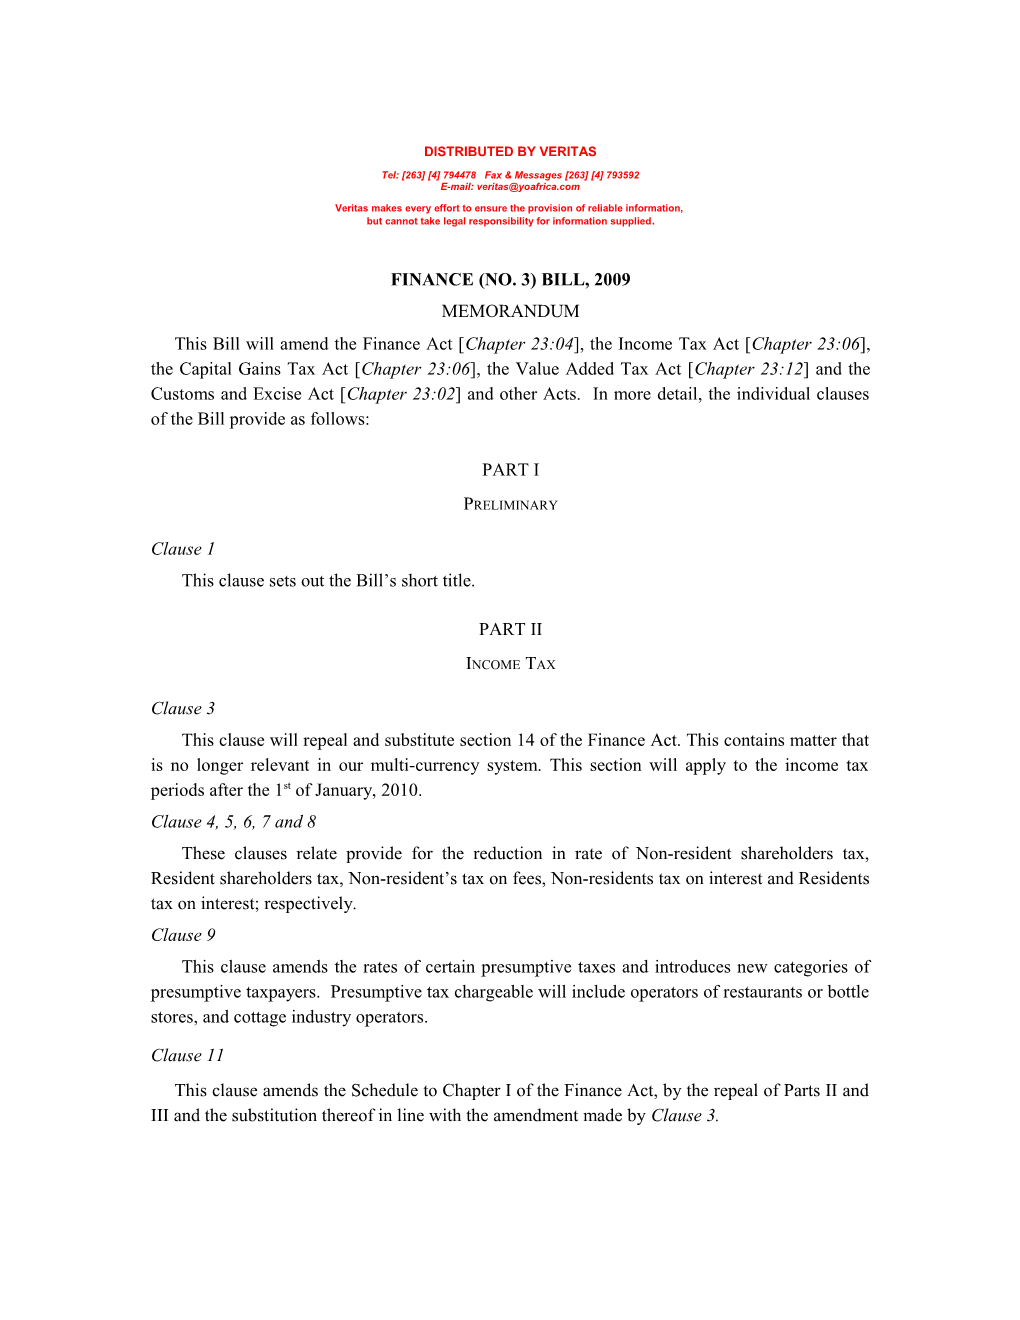 Finance (No. 3) Bill - HB 13, 2009